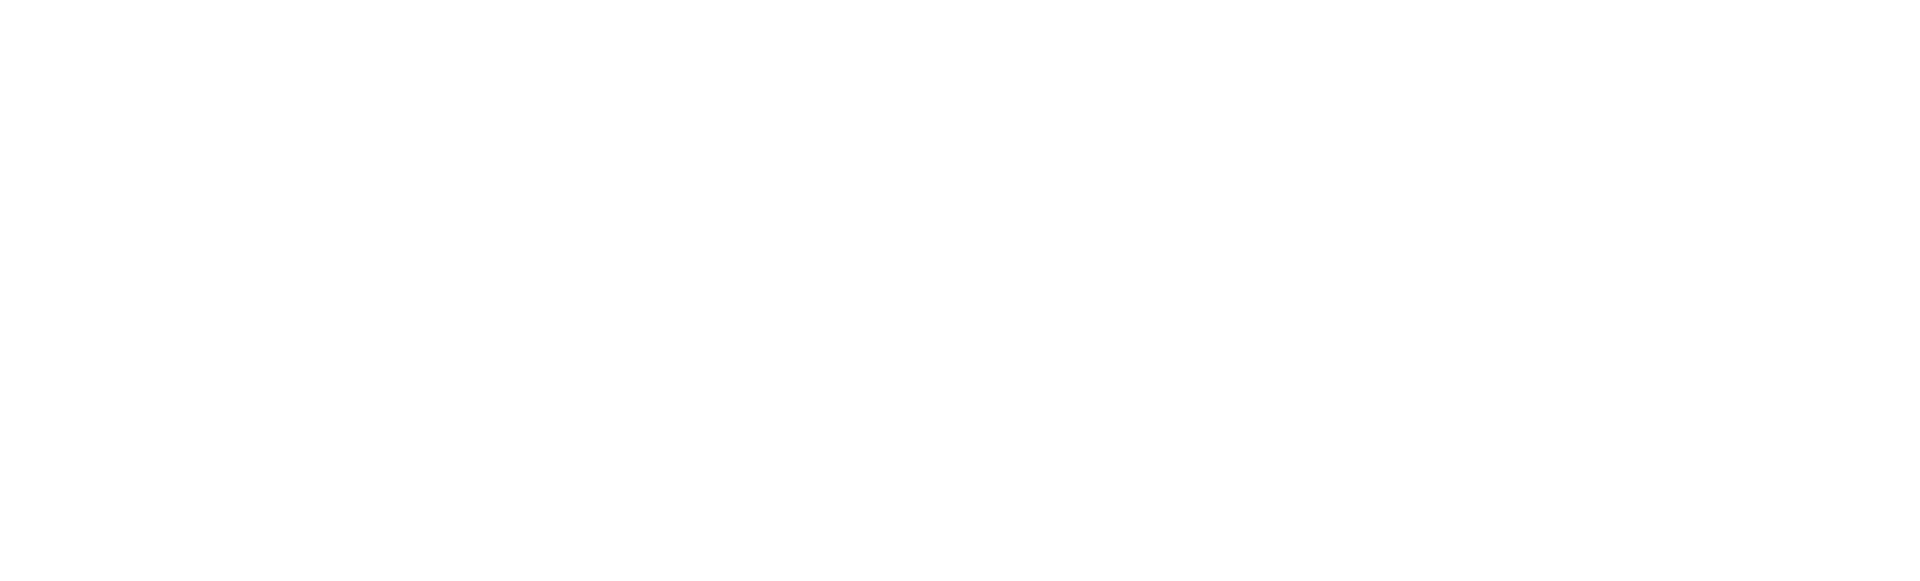 UK Immigration Attorney Colorado Logo